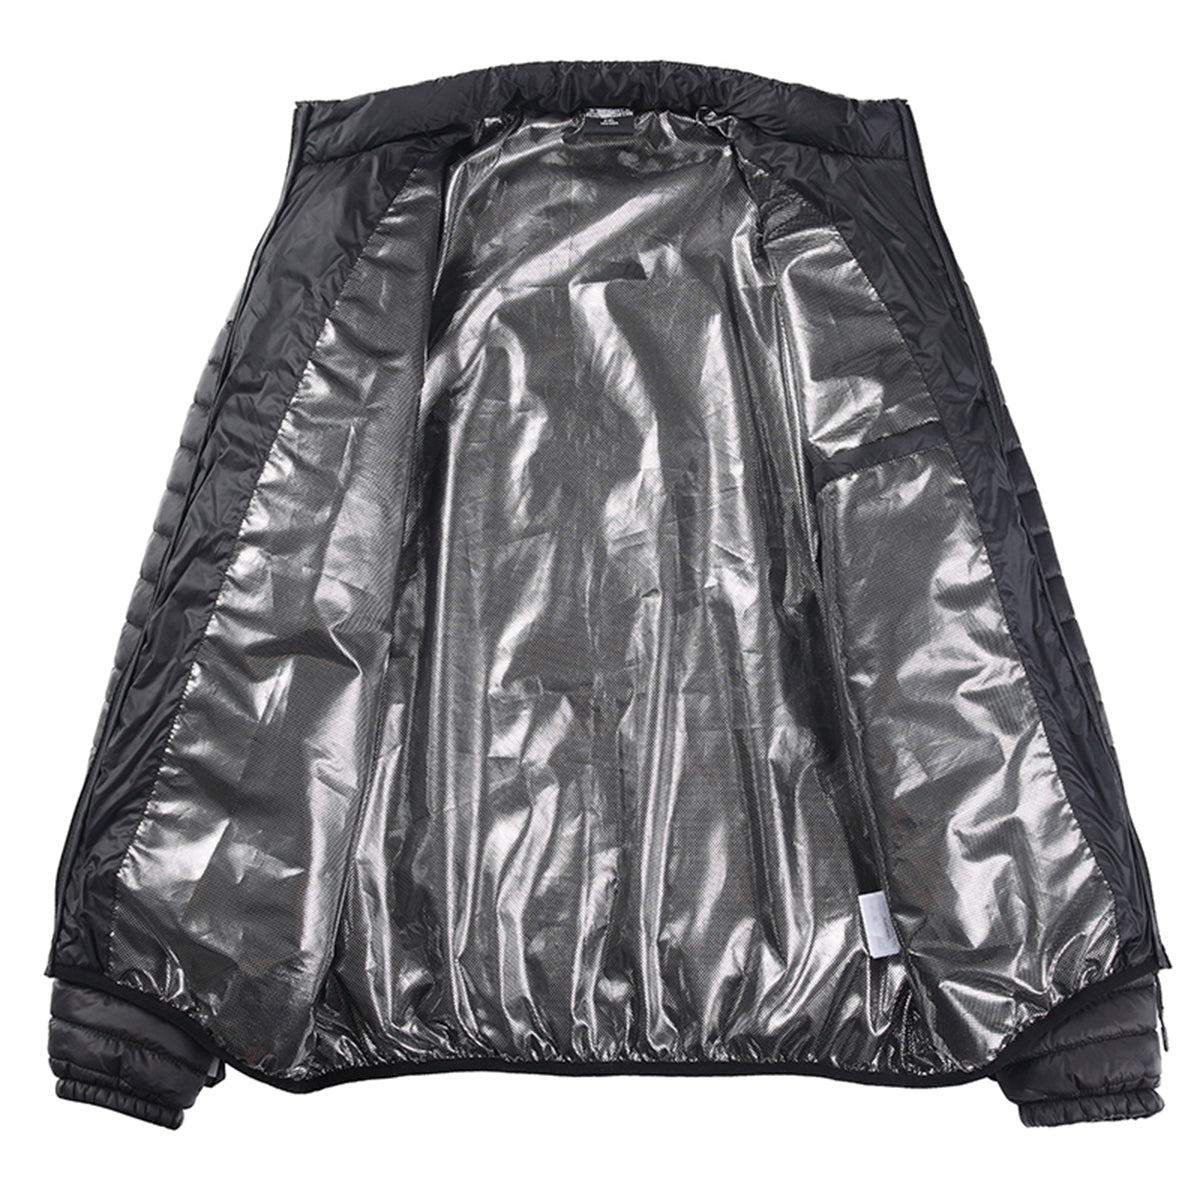 Dim Gray USB Electric Heated Coats Heating Vest Parka Winter Puffer Jacket Outwear